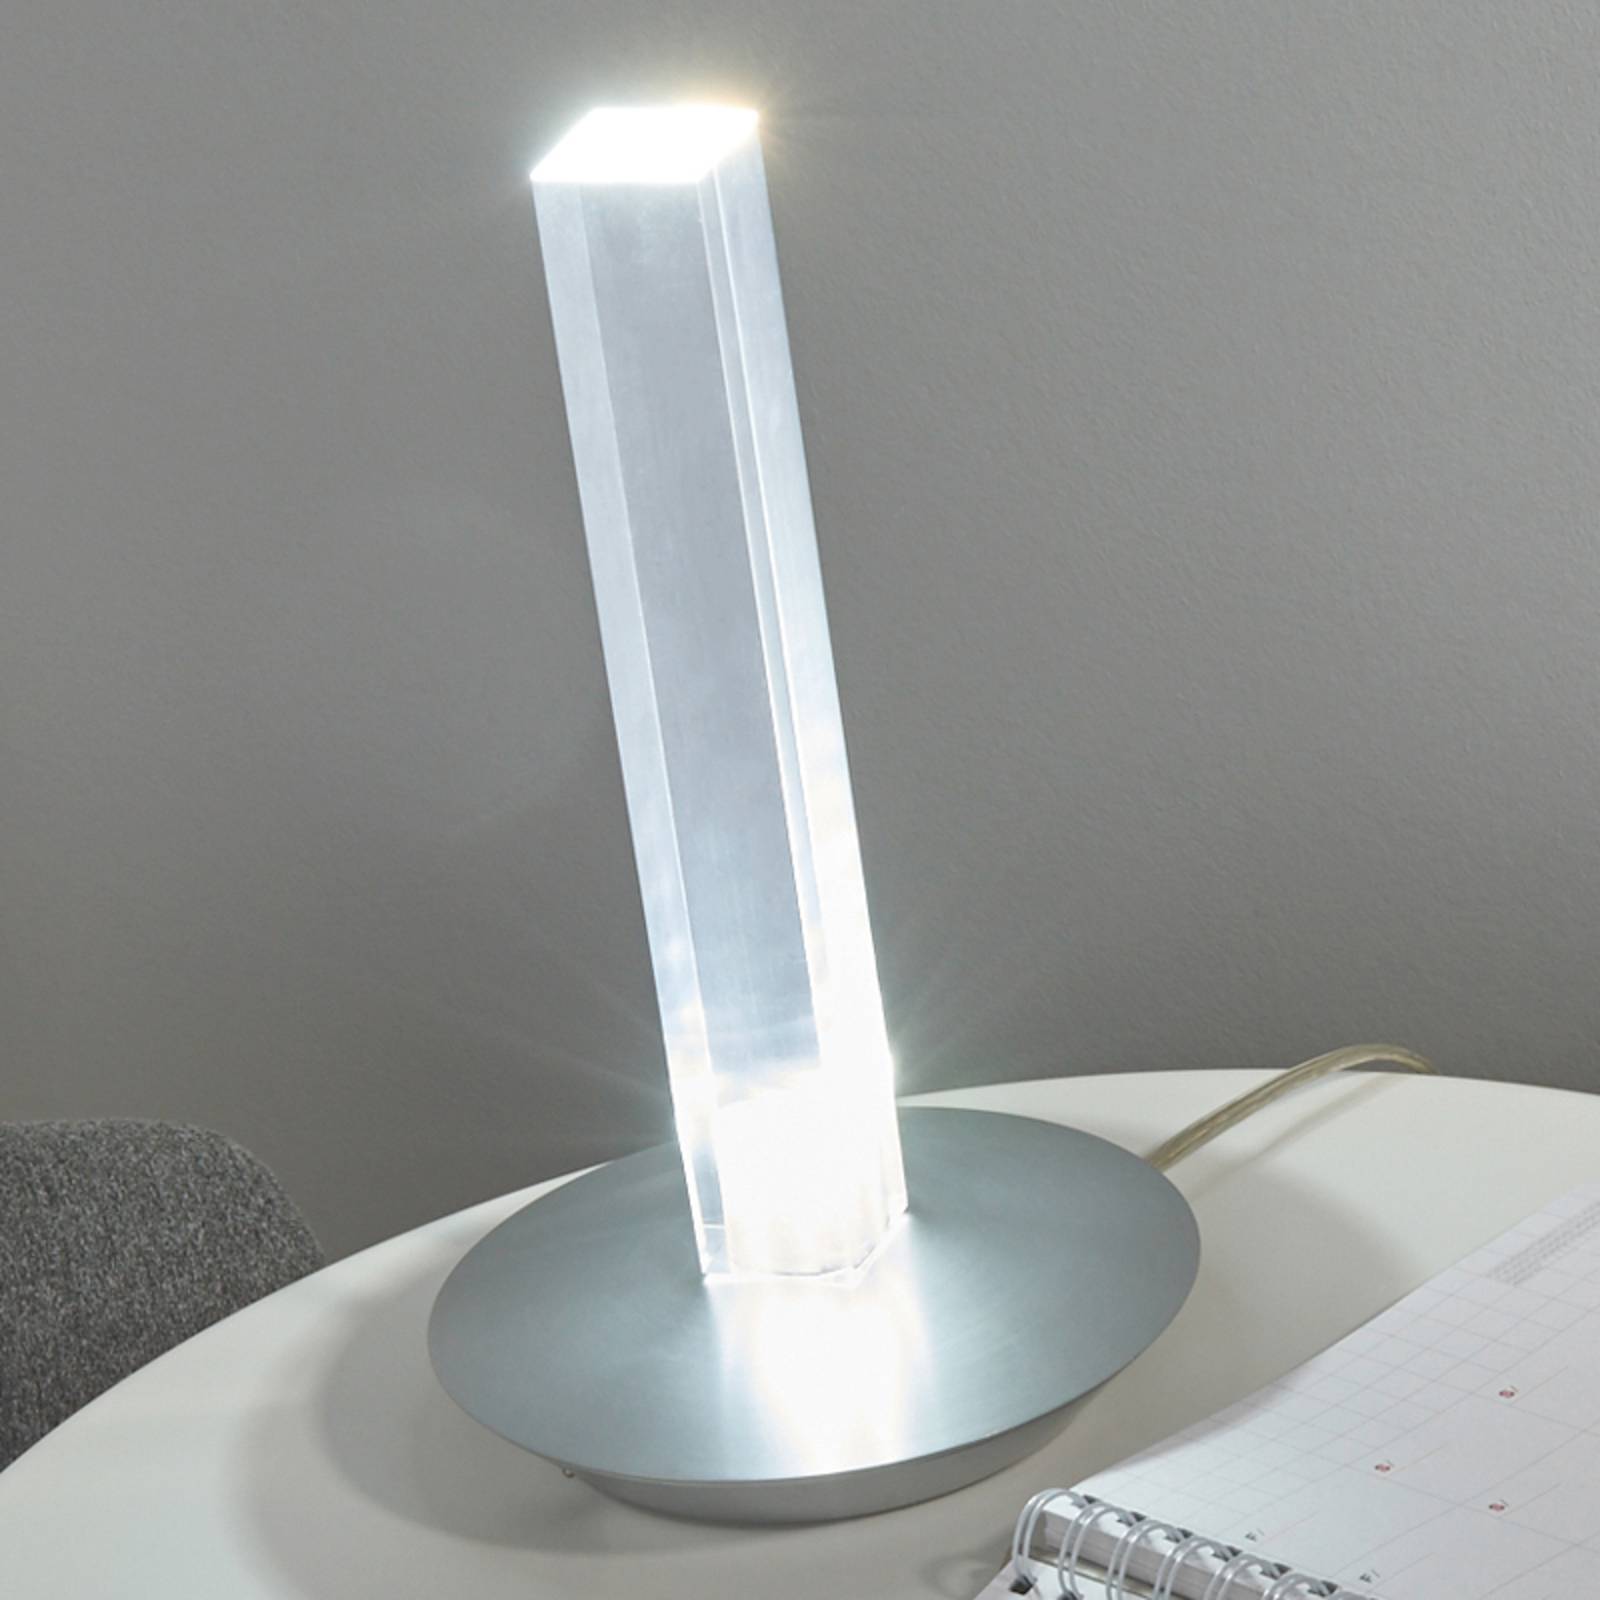 Oluce Cand-LED - stimmungsvolle LED-Tischleuchte von Oluce